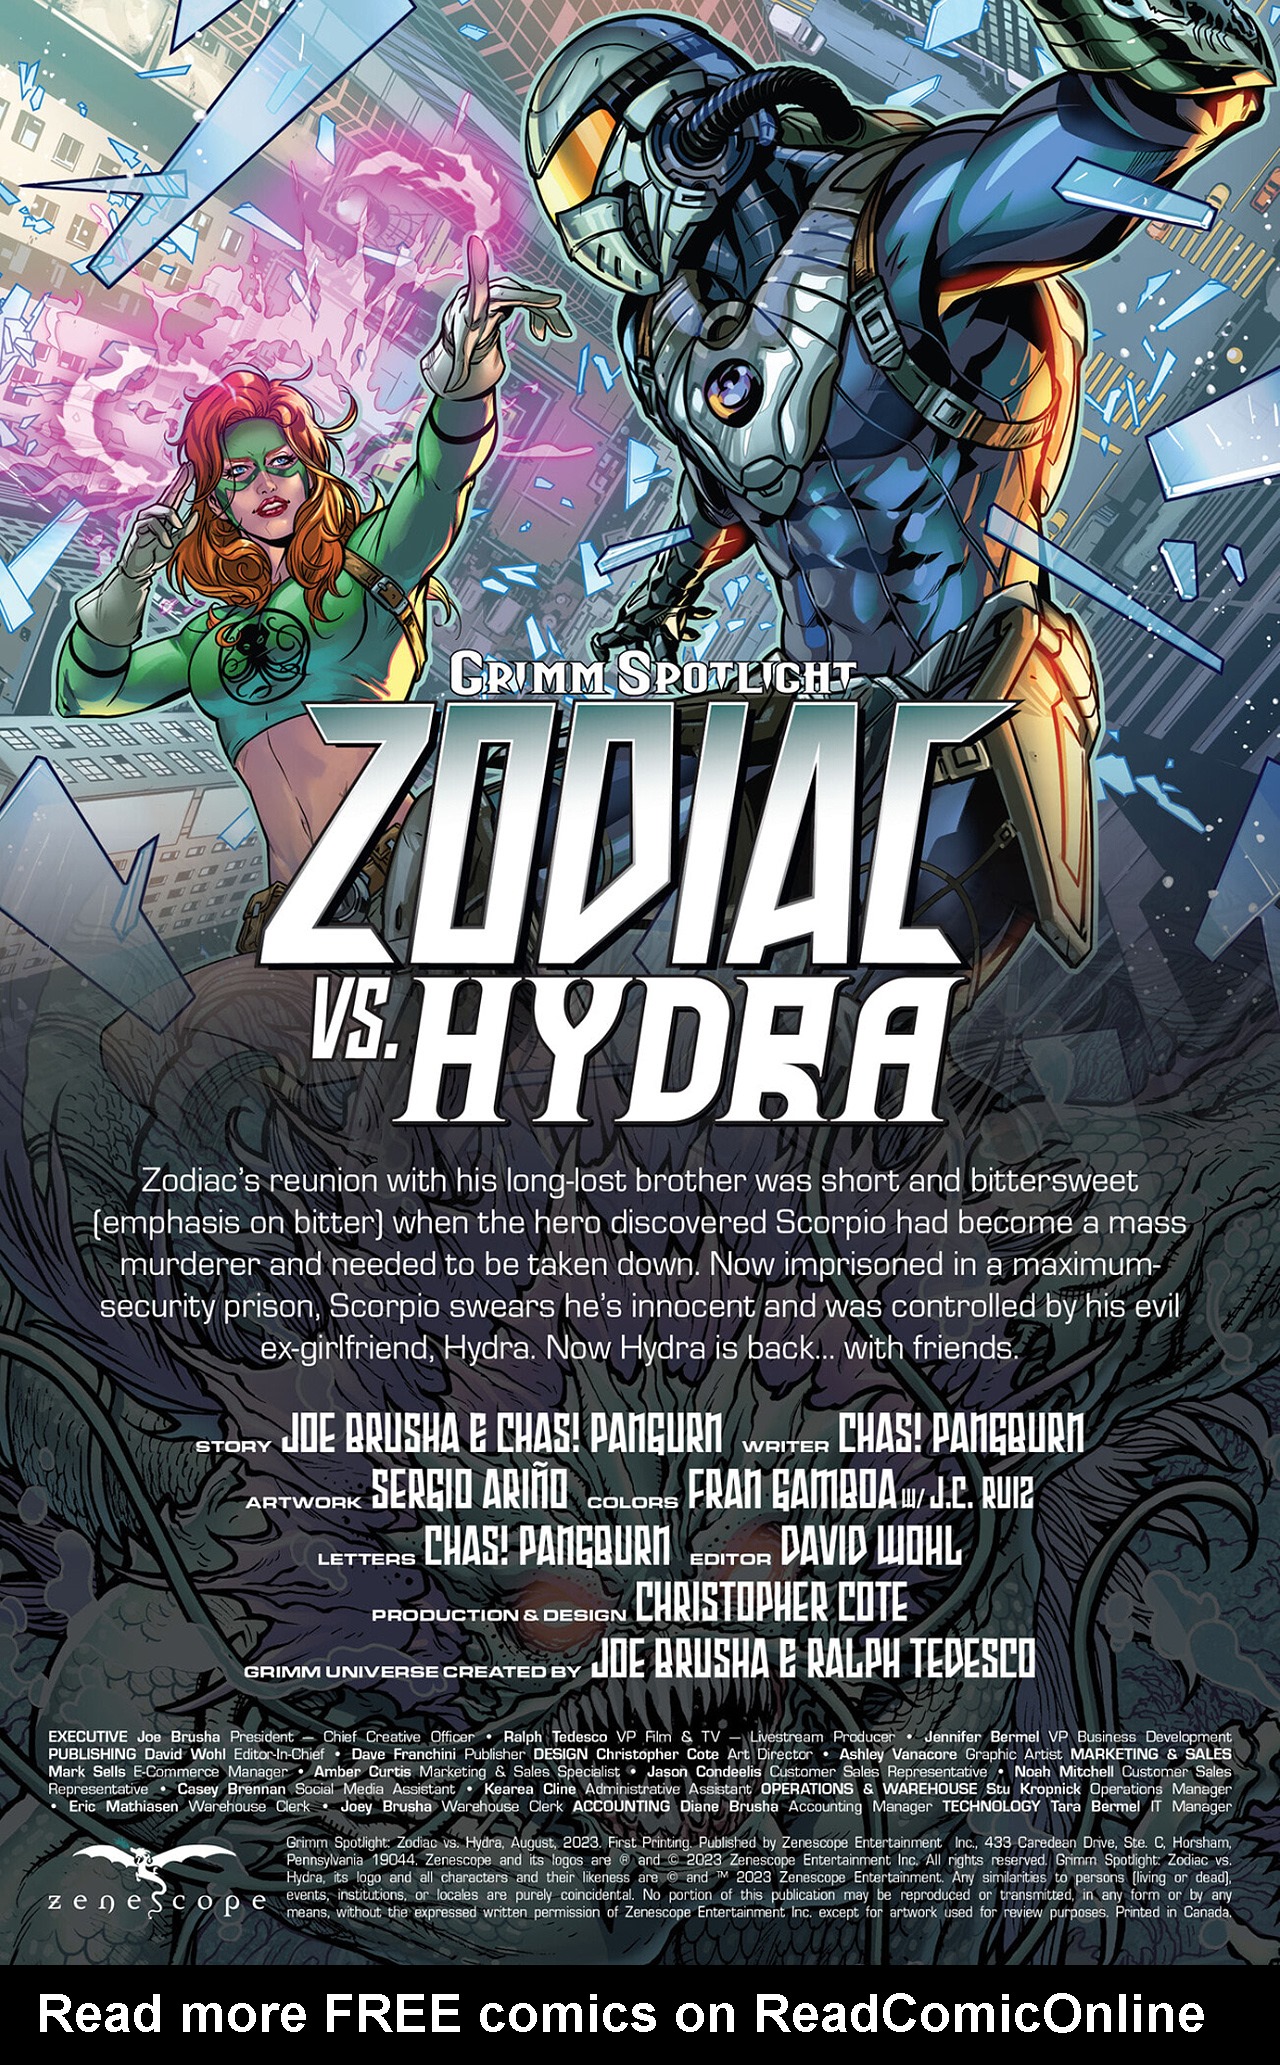 Read online Grimm Spotlight: Zodiac vs Hydra comic -  Issue # Full - 2